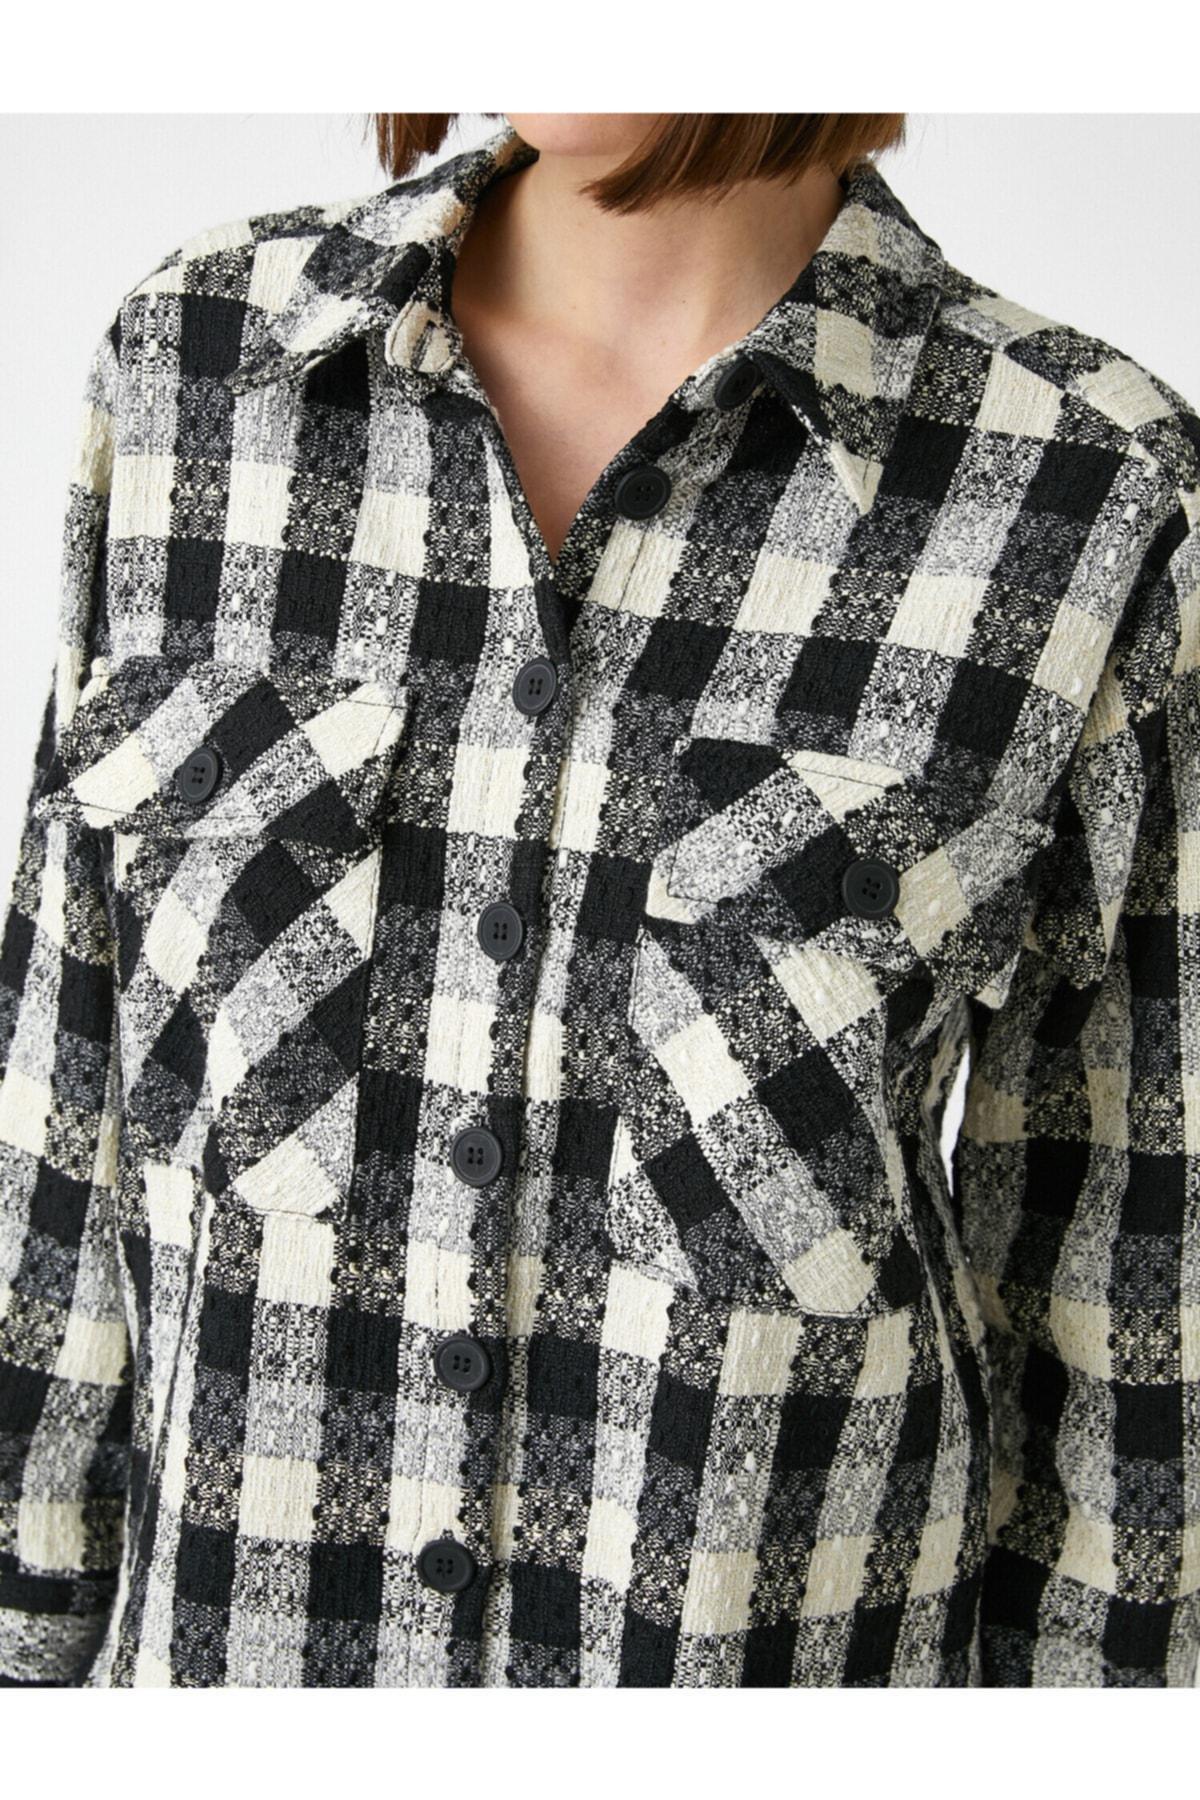 Koton - Black Checkered Pocket Jacket